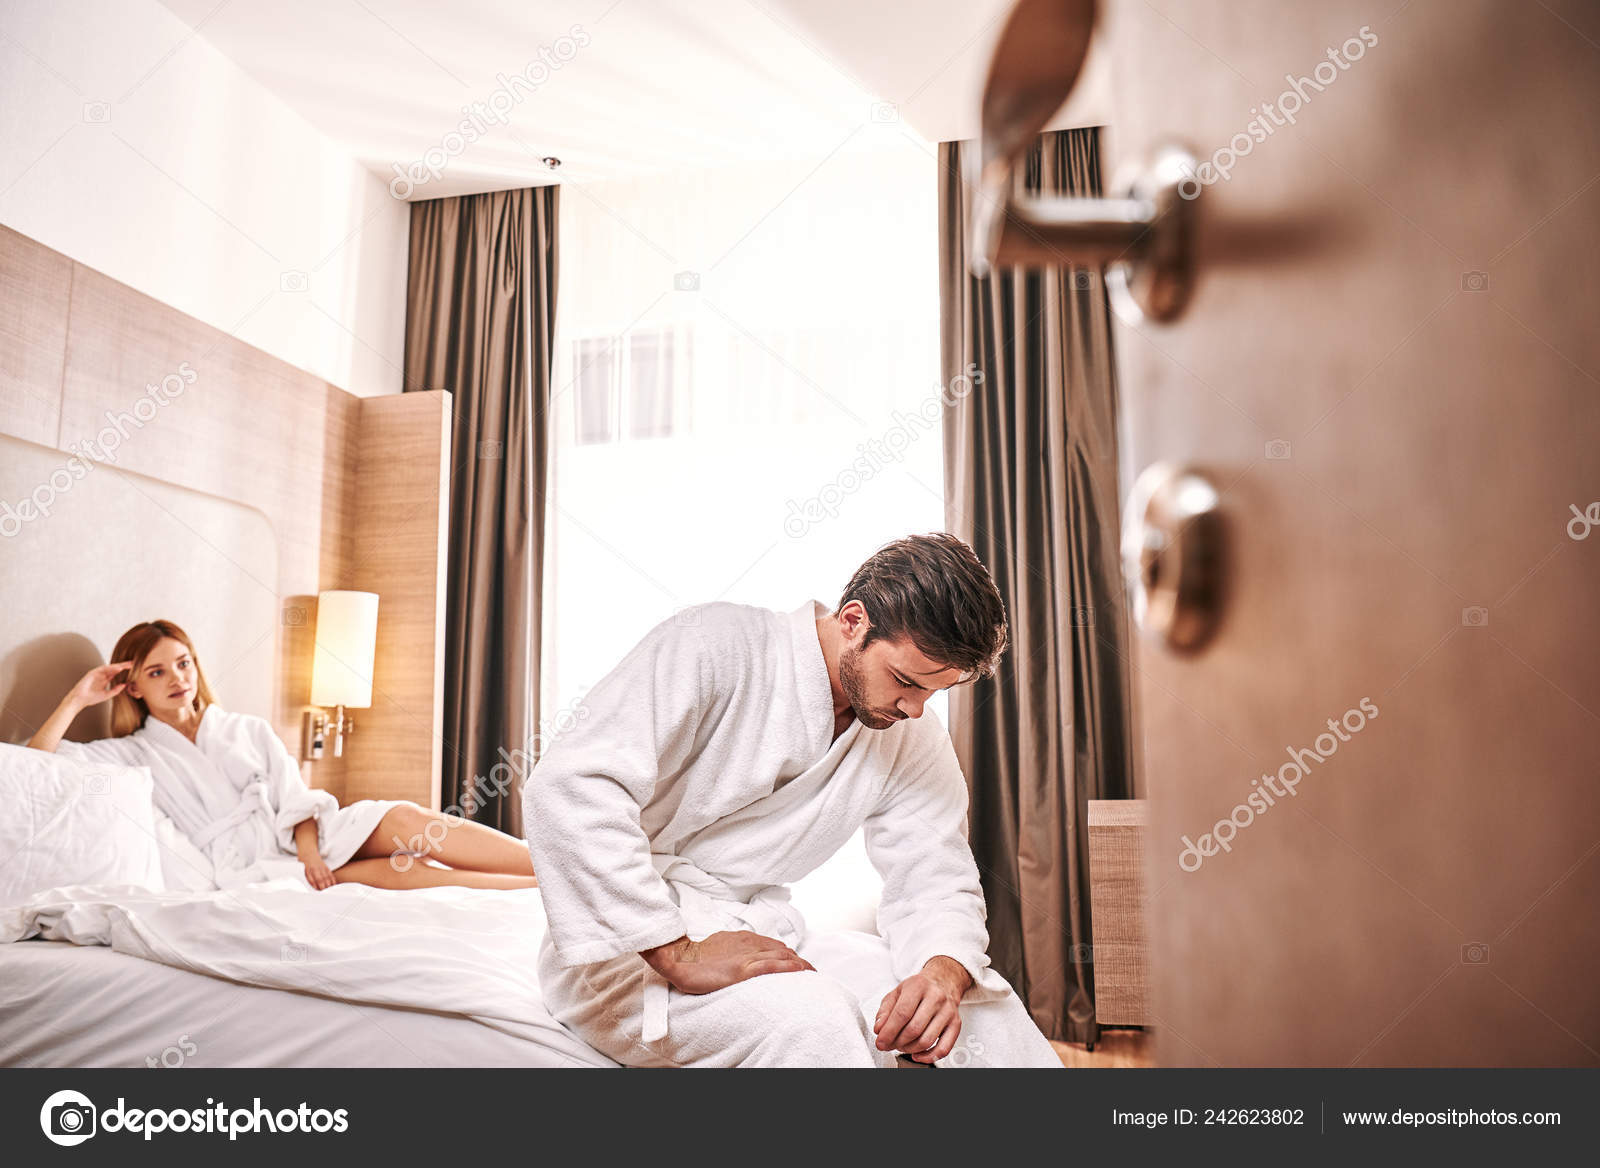 Weakness worried man in hotel room picture